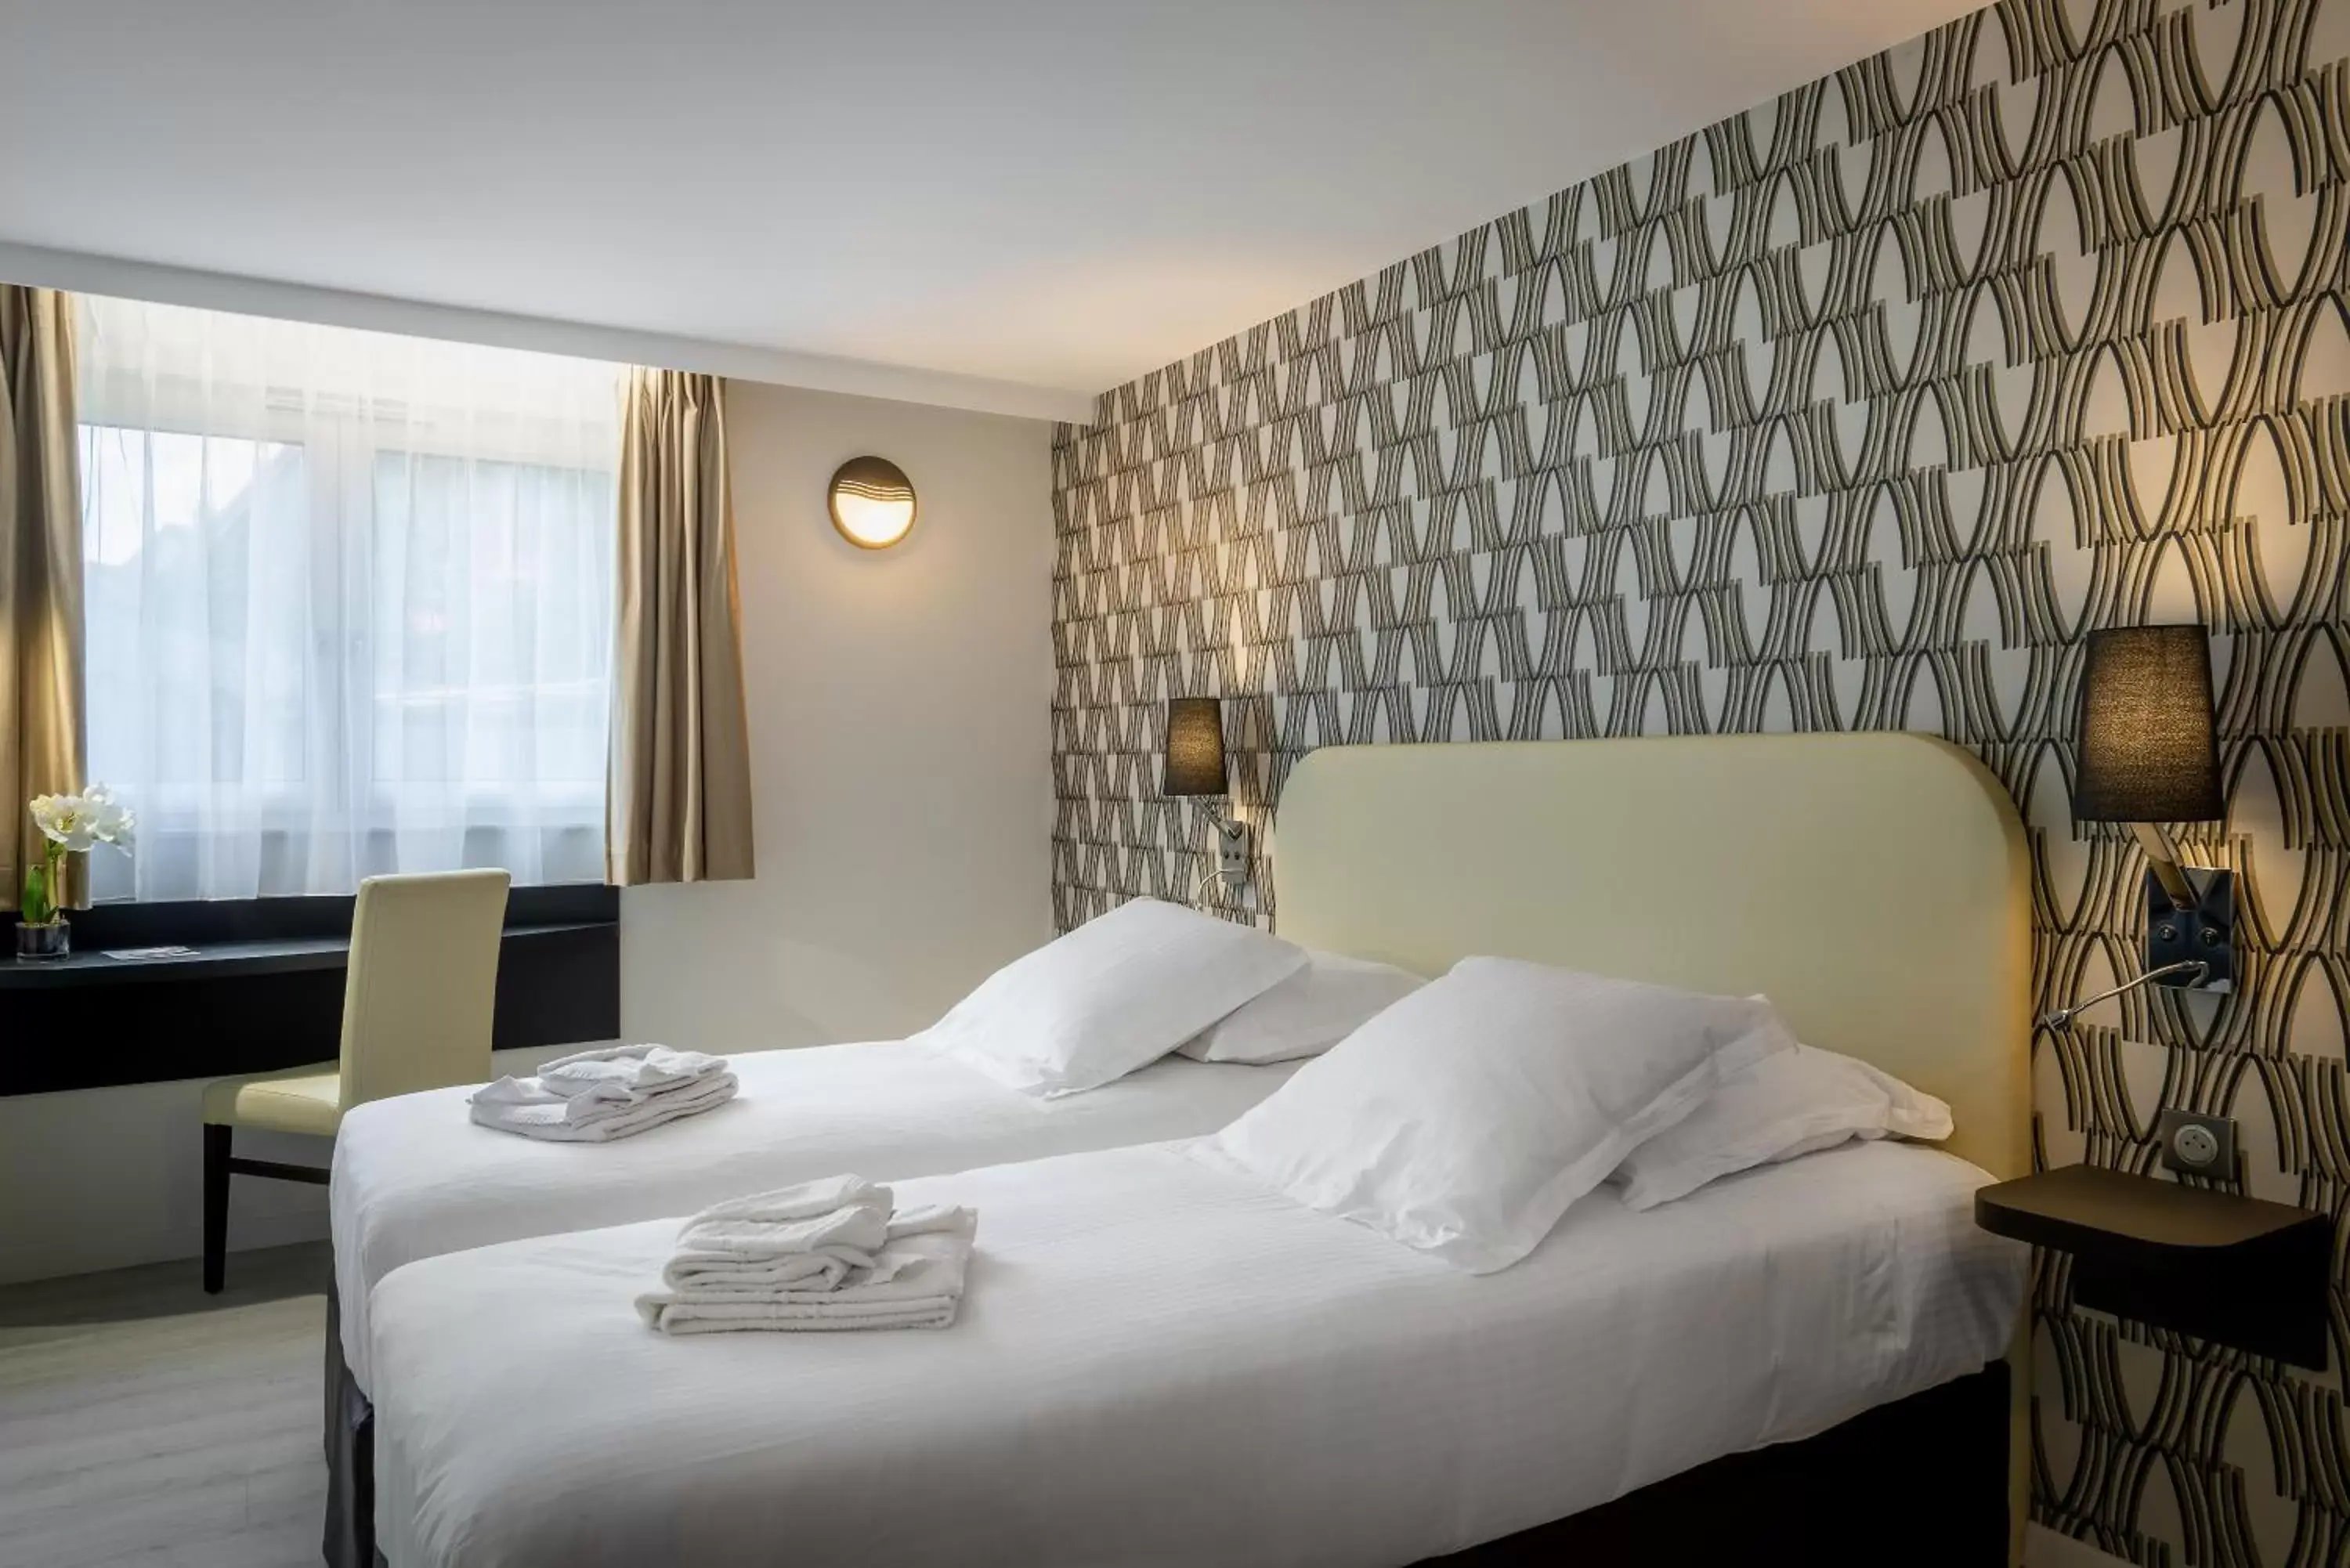 Bed, Room Photo in Zenith Hotel Caen